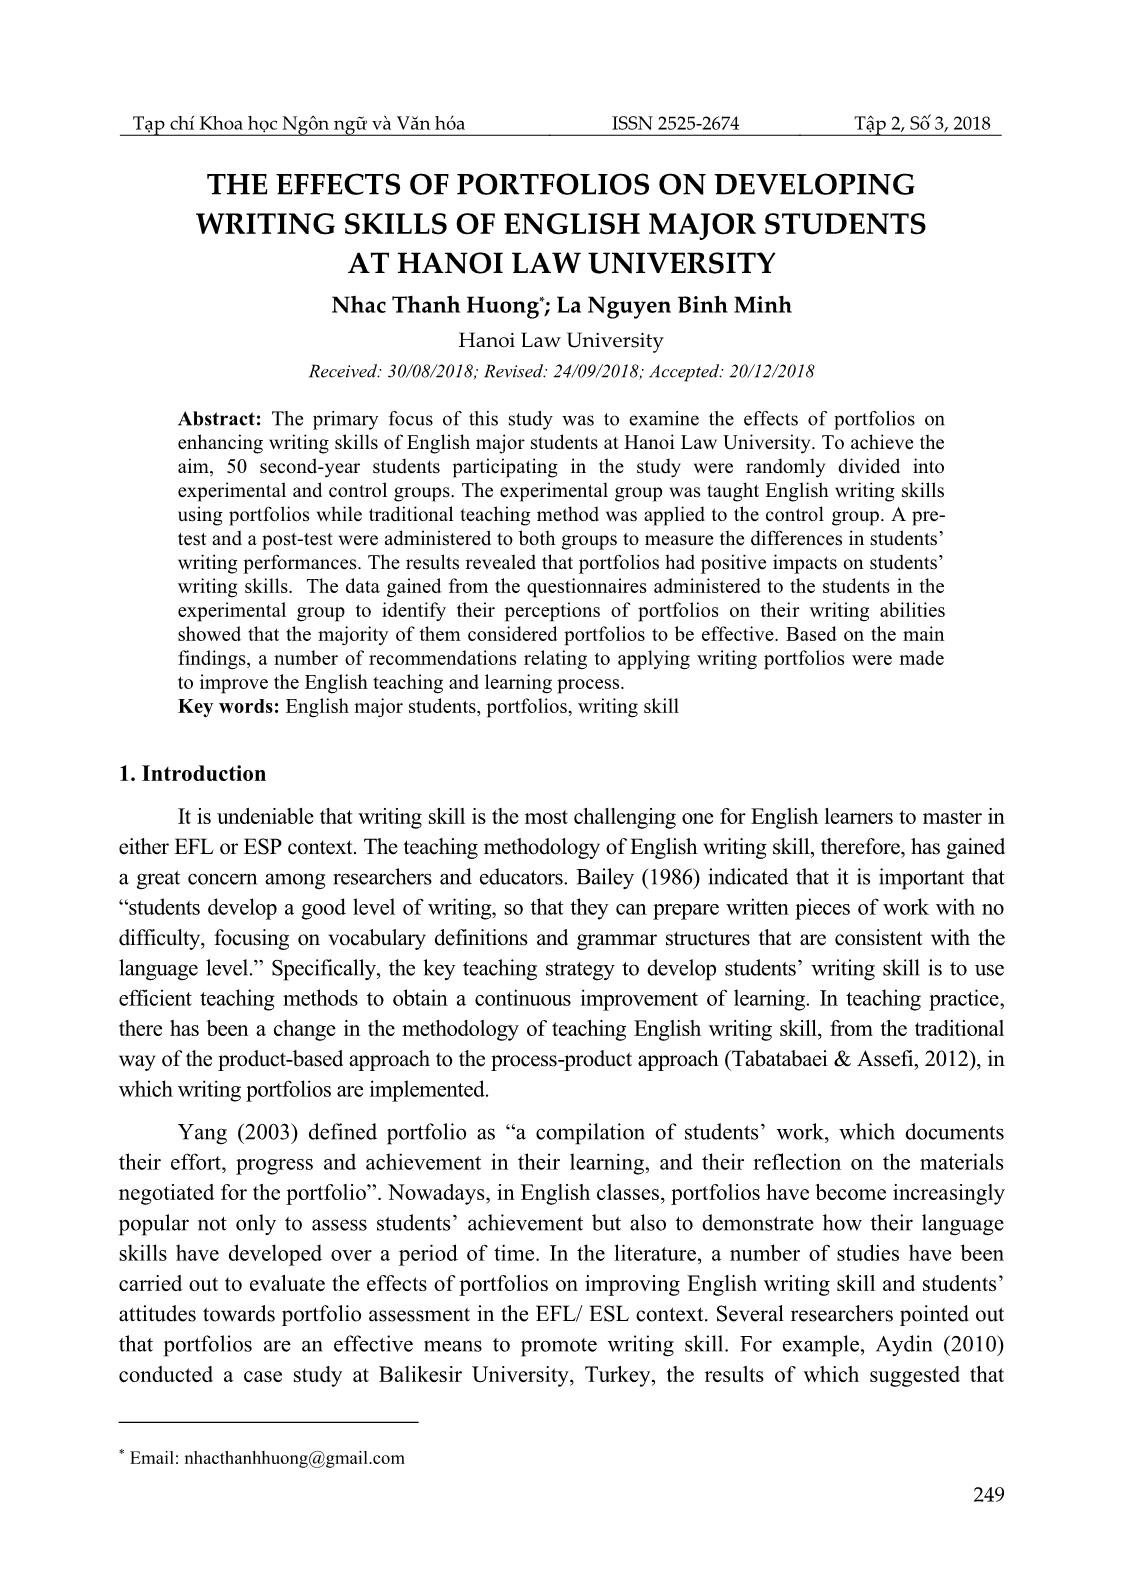 The effects of portfolios on developing writing skills of english major students at Hanoi law university trang 1